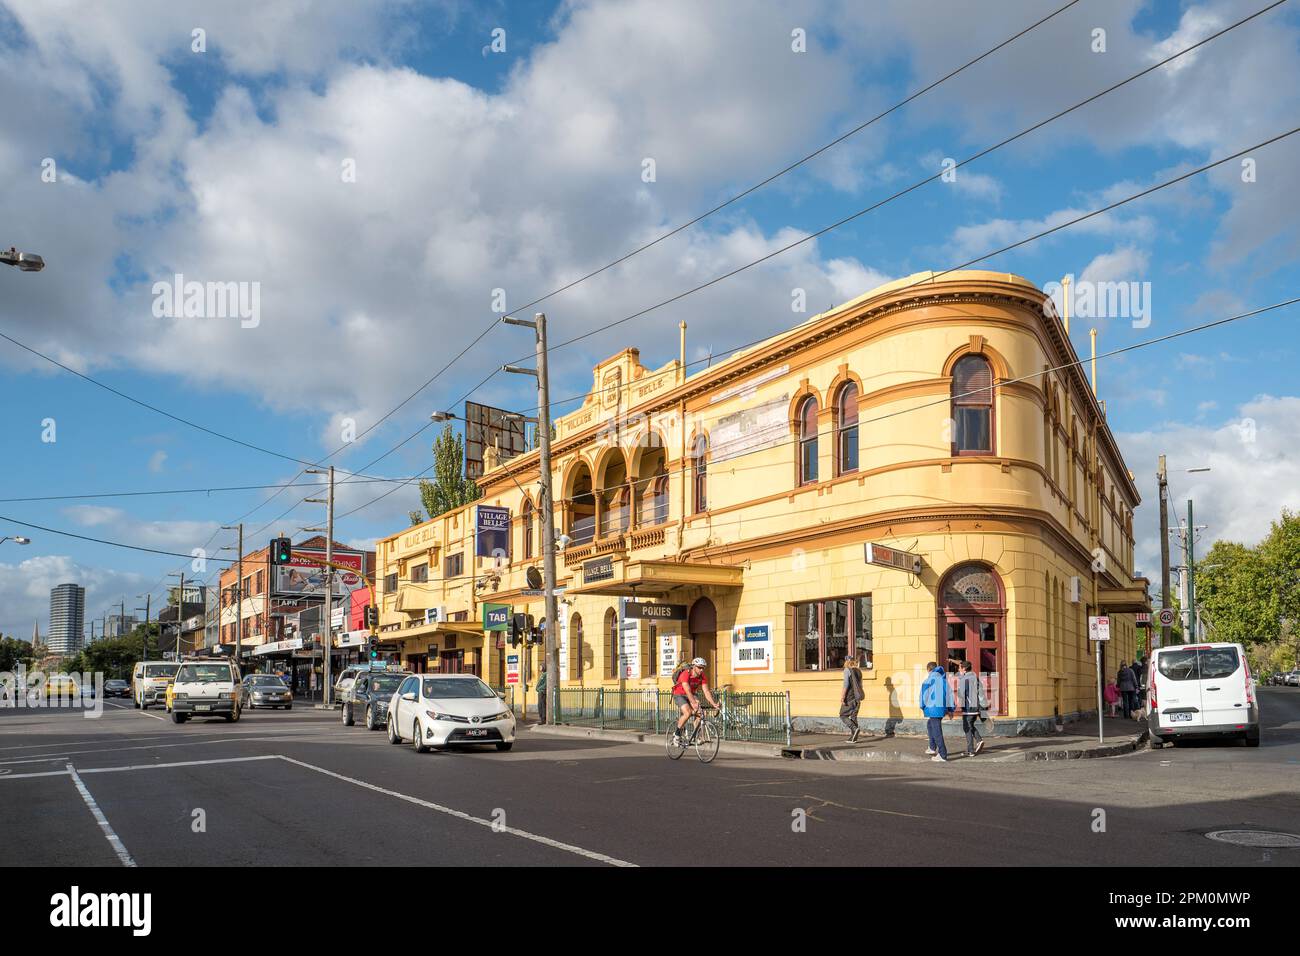 Historic Village Belle Hotel on Barkly Street in St Kilda, Melbourne, Australia Stock Photo